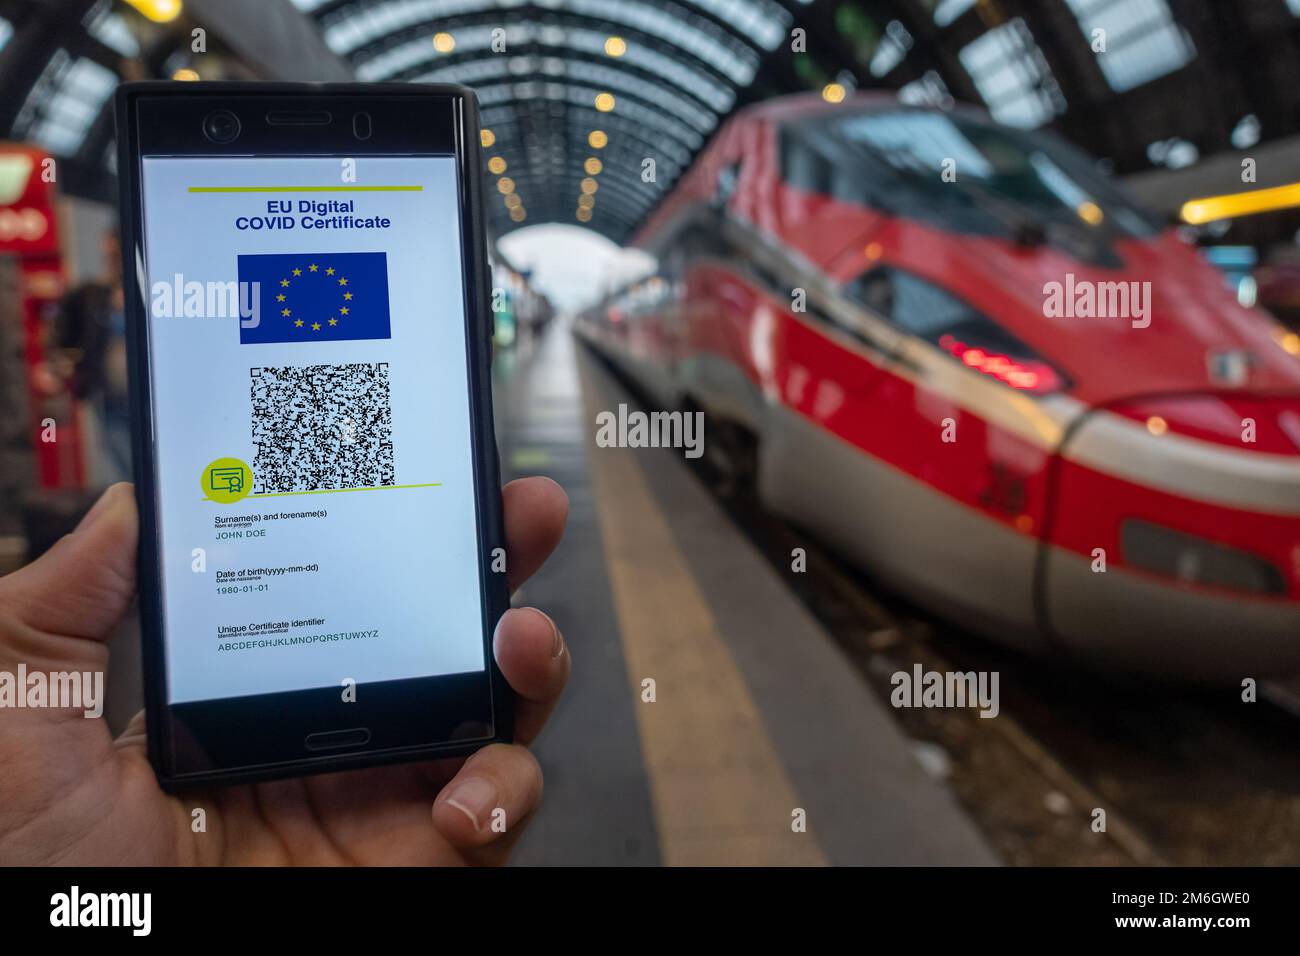 Woman showing on smartphone EU Digital Covid Certificate. Stock Photo